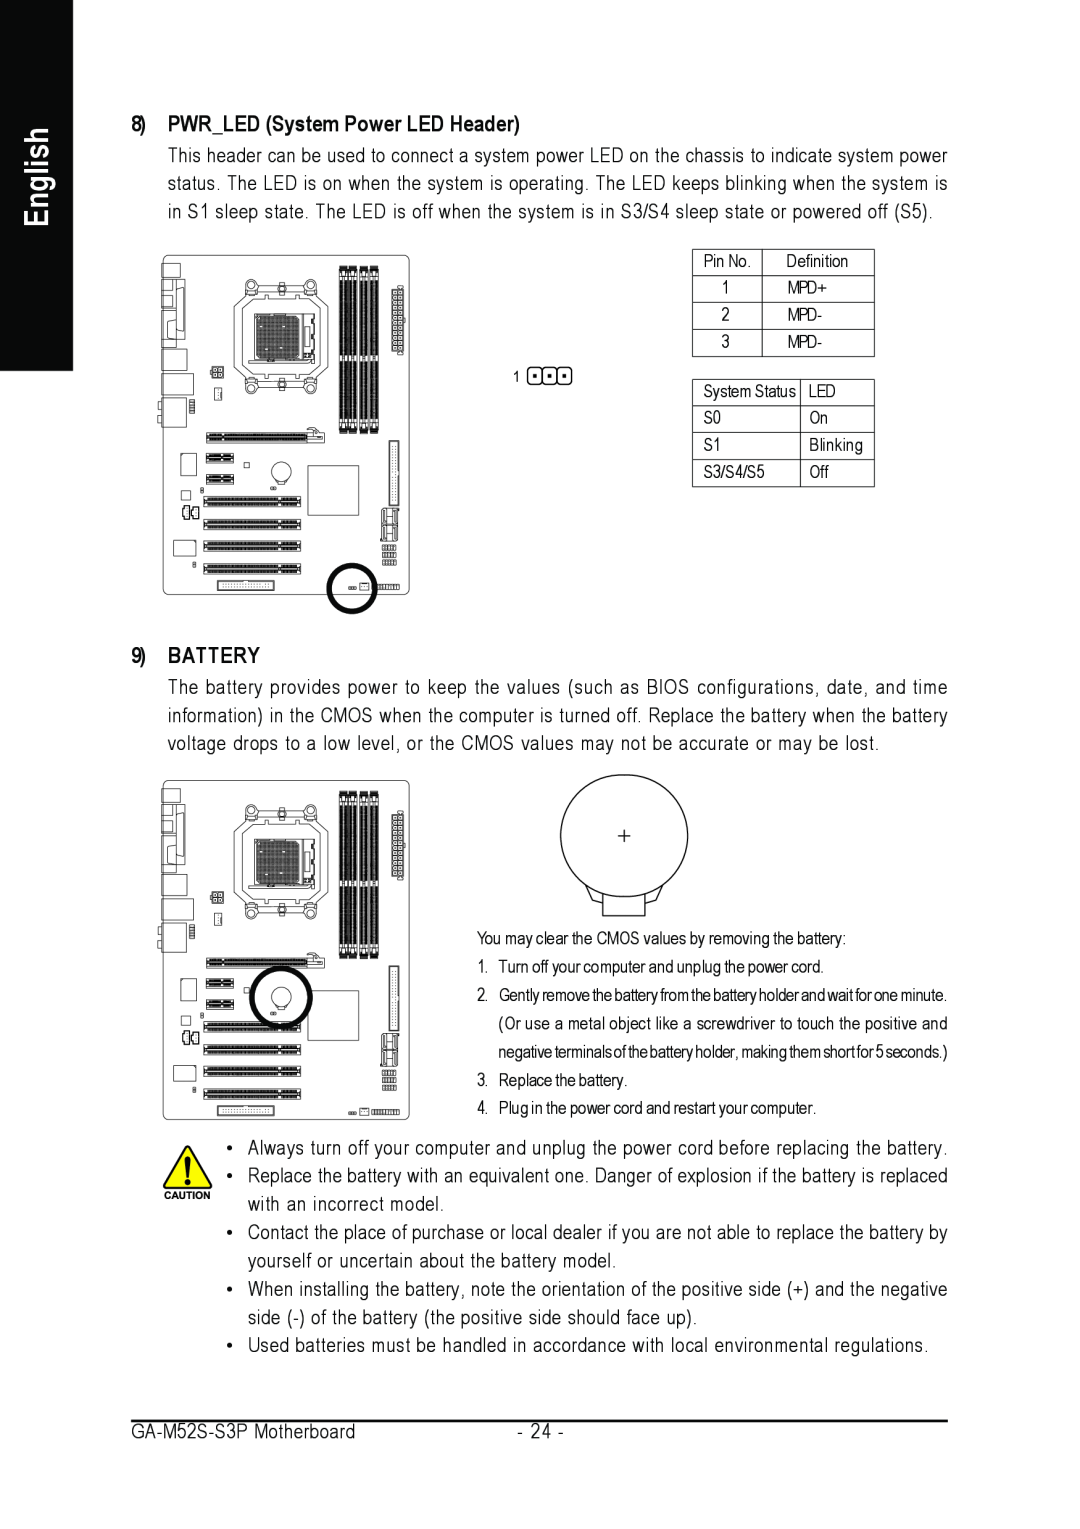 Gigabyte GA-M52S-S3P user manual PWRLED System Power LED Header, Battery, English 